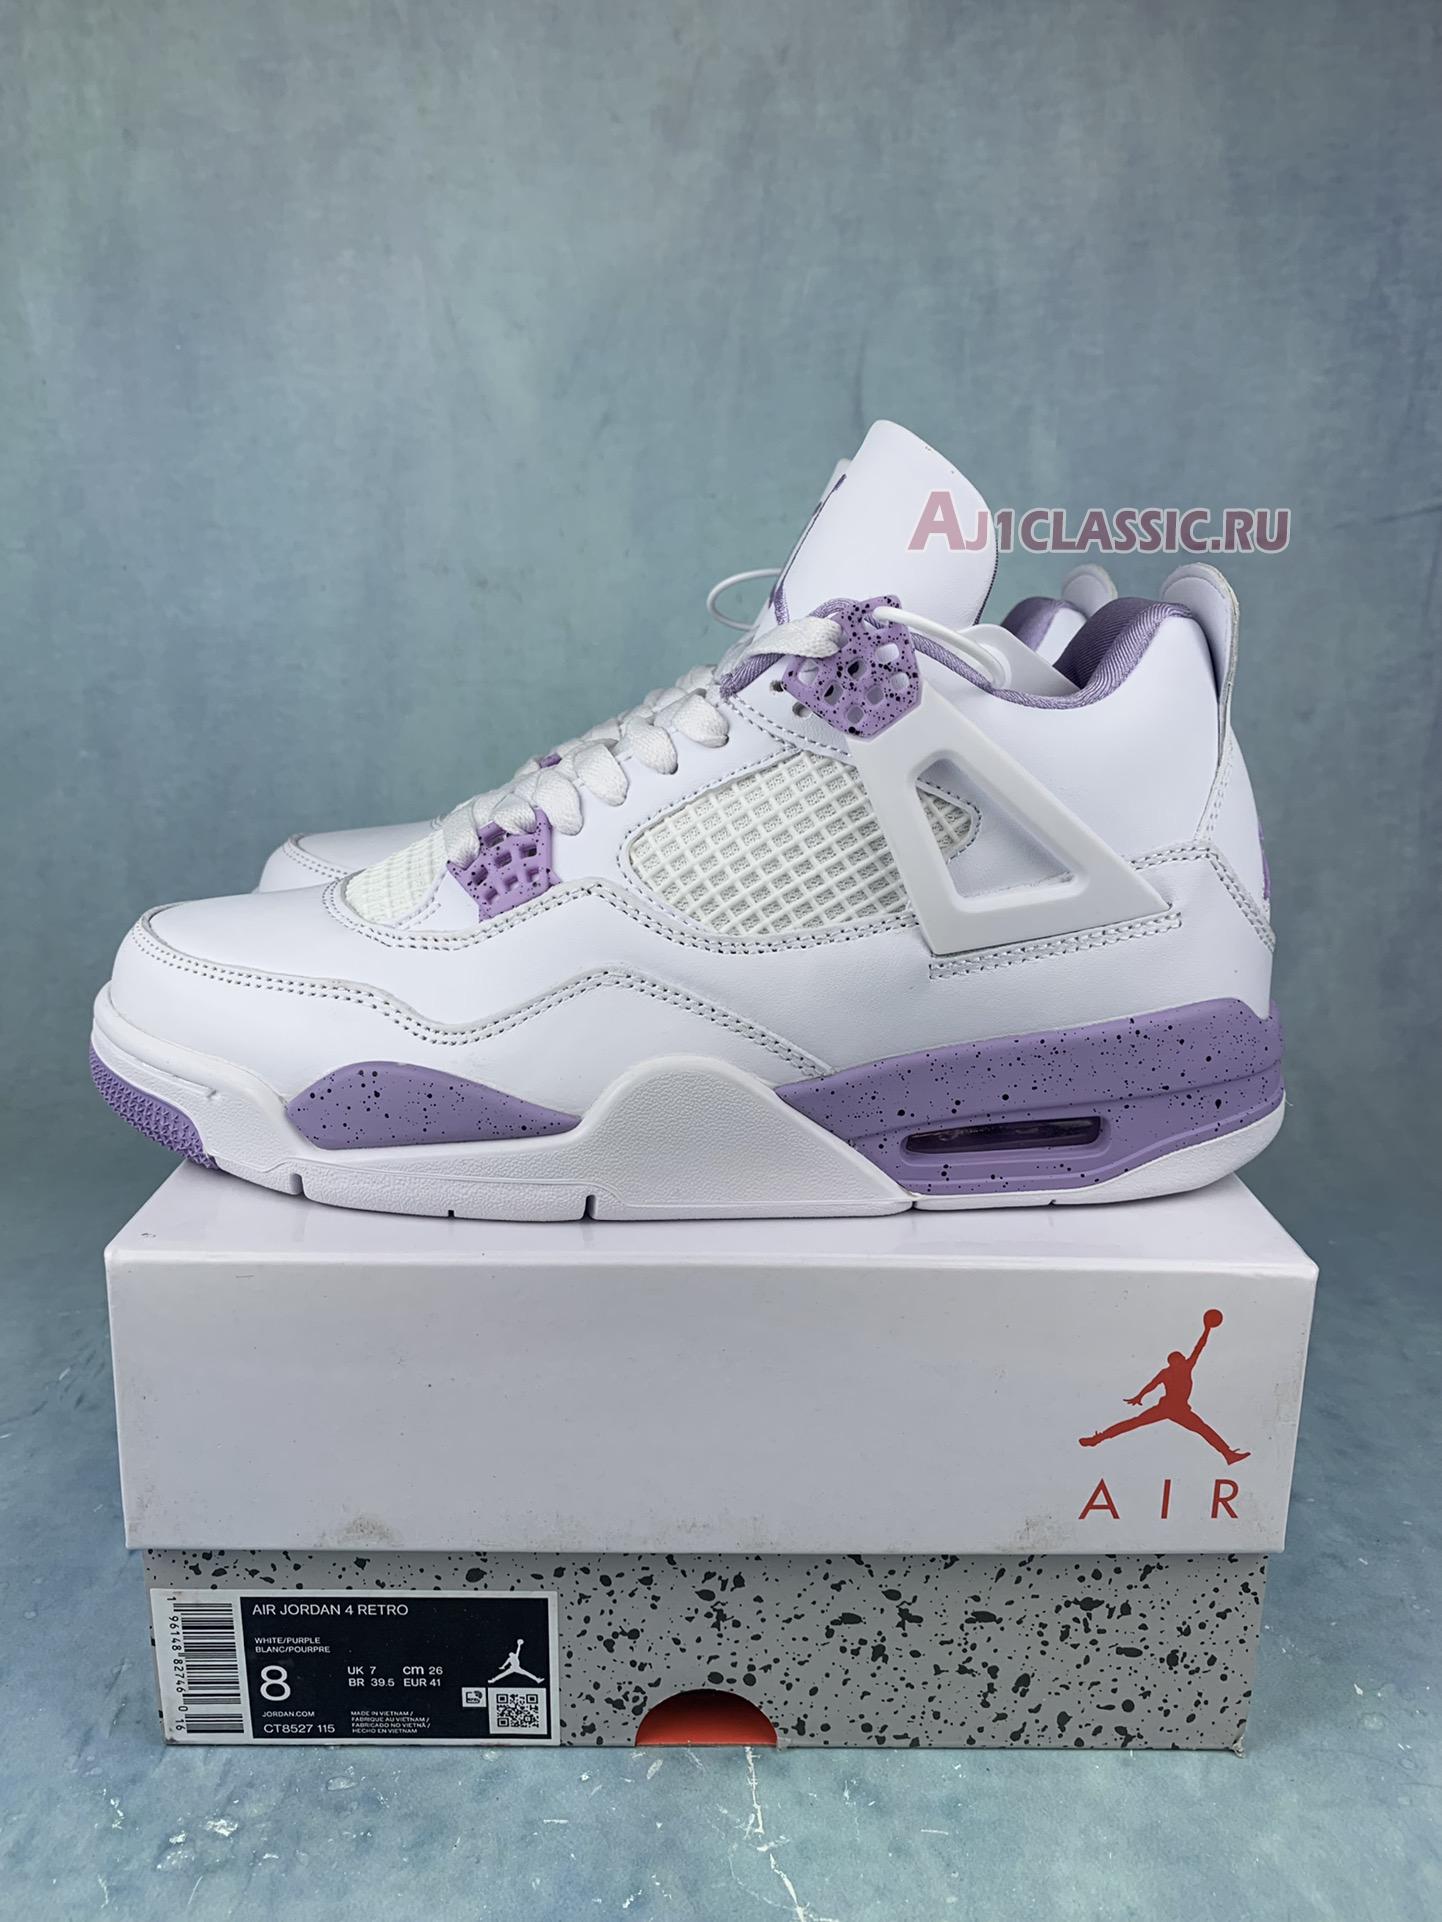 Air Jordan 4 Retro White Purple CT8527-115-2 White/Purple Sneakers